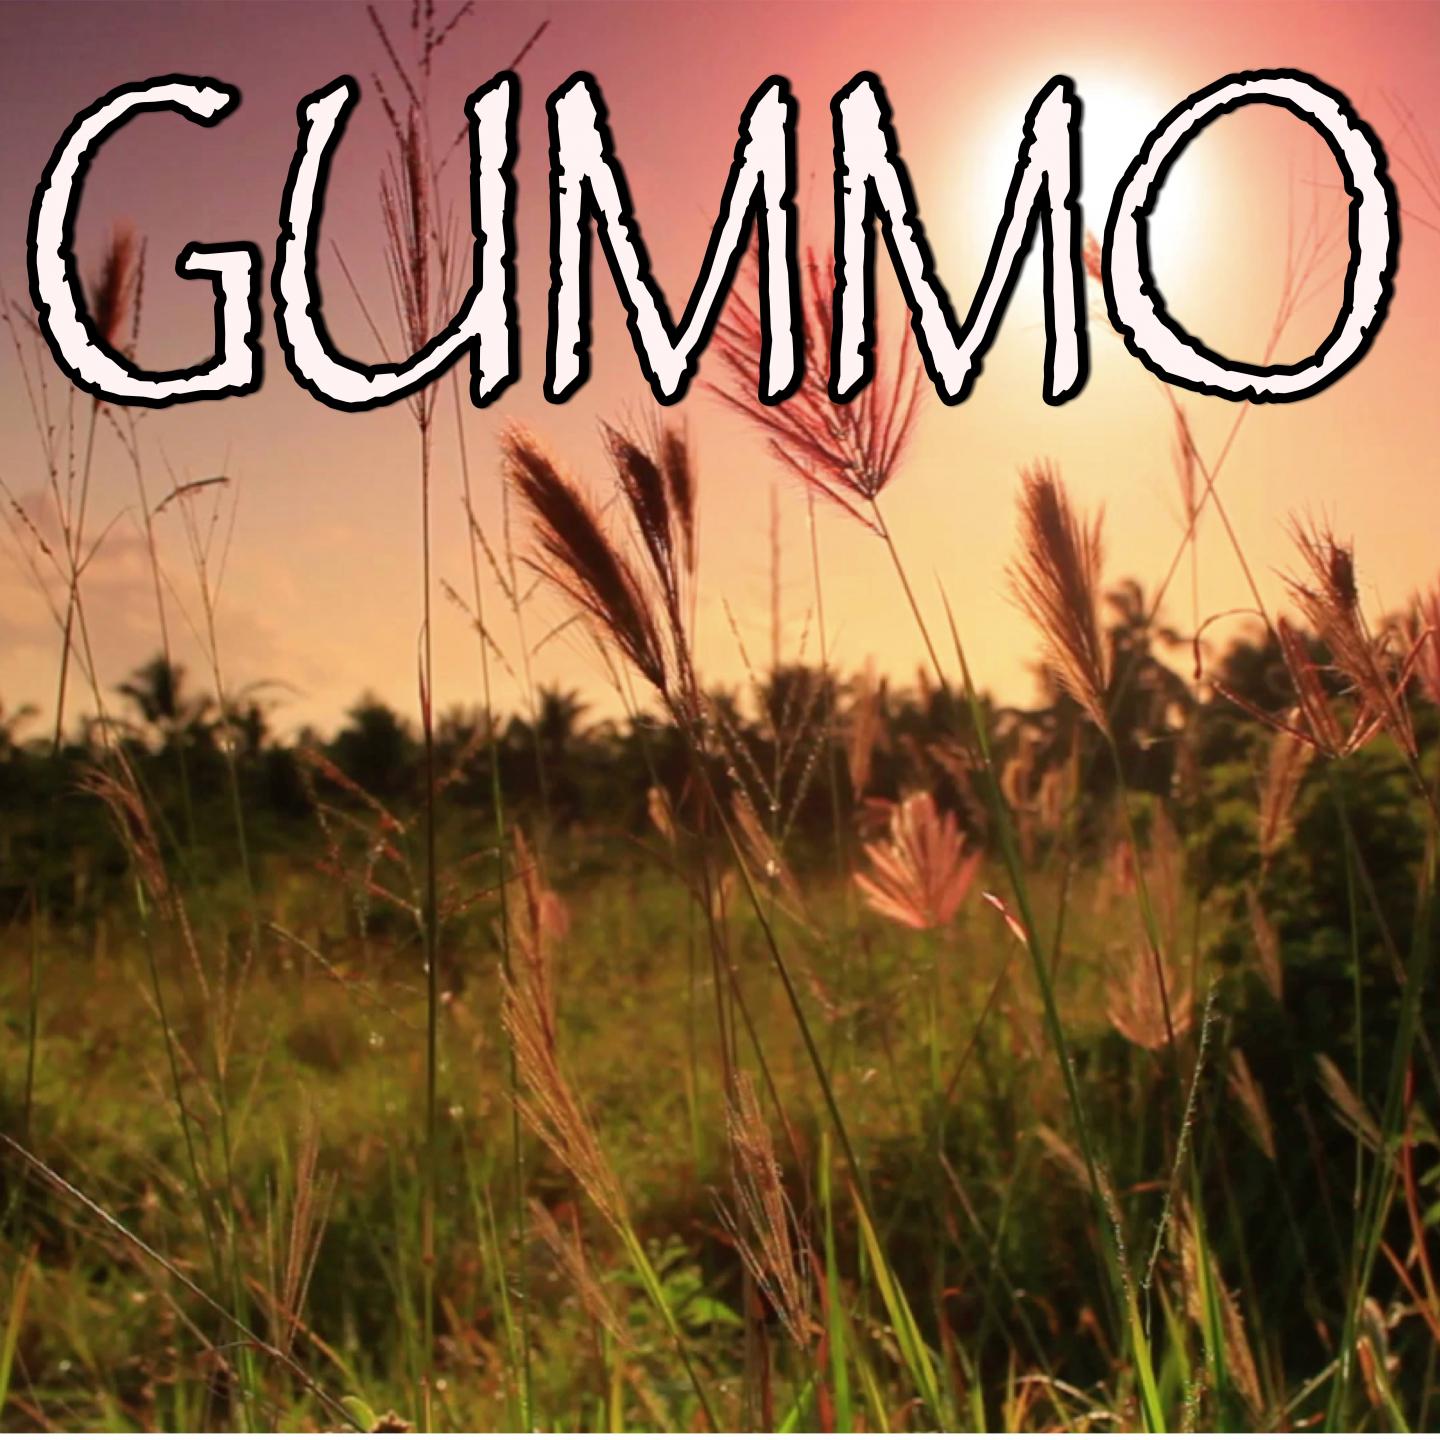 Gummo - Tribute to 6ix9ine